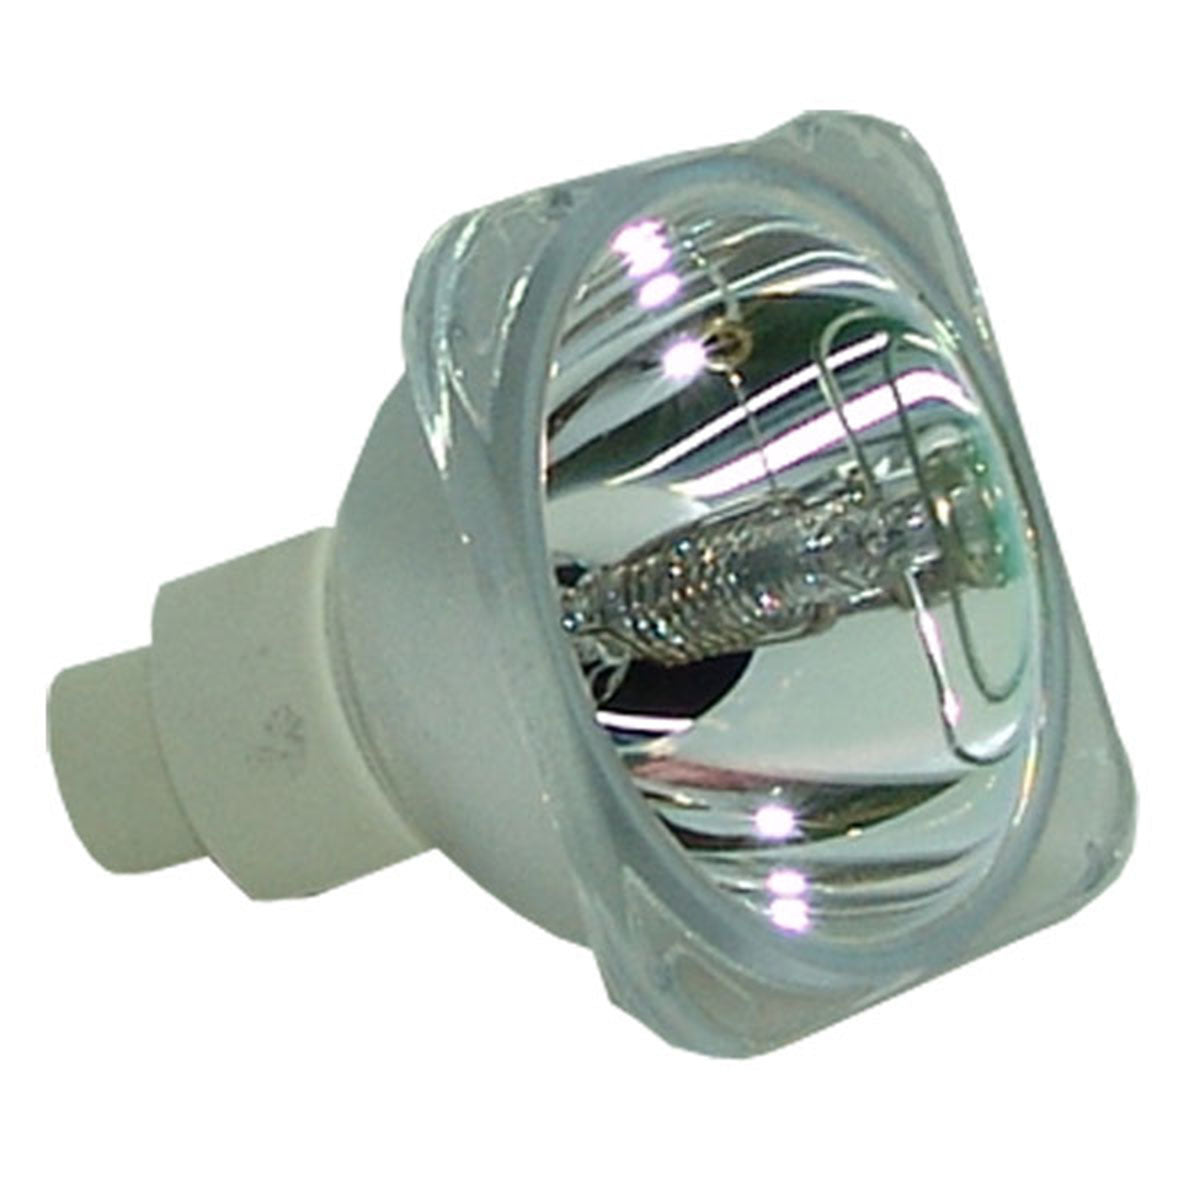 Osram 69789-1 Osram Projector Bare Lamp